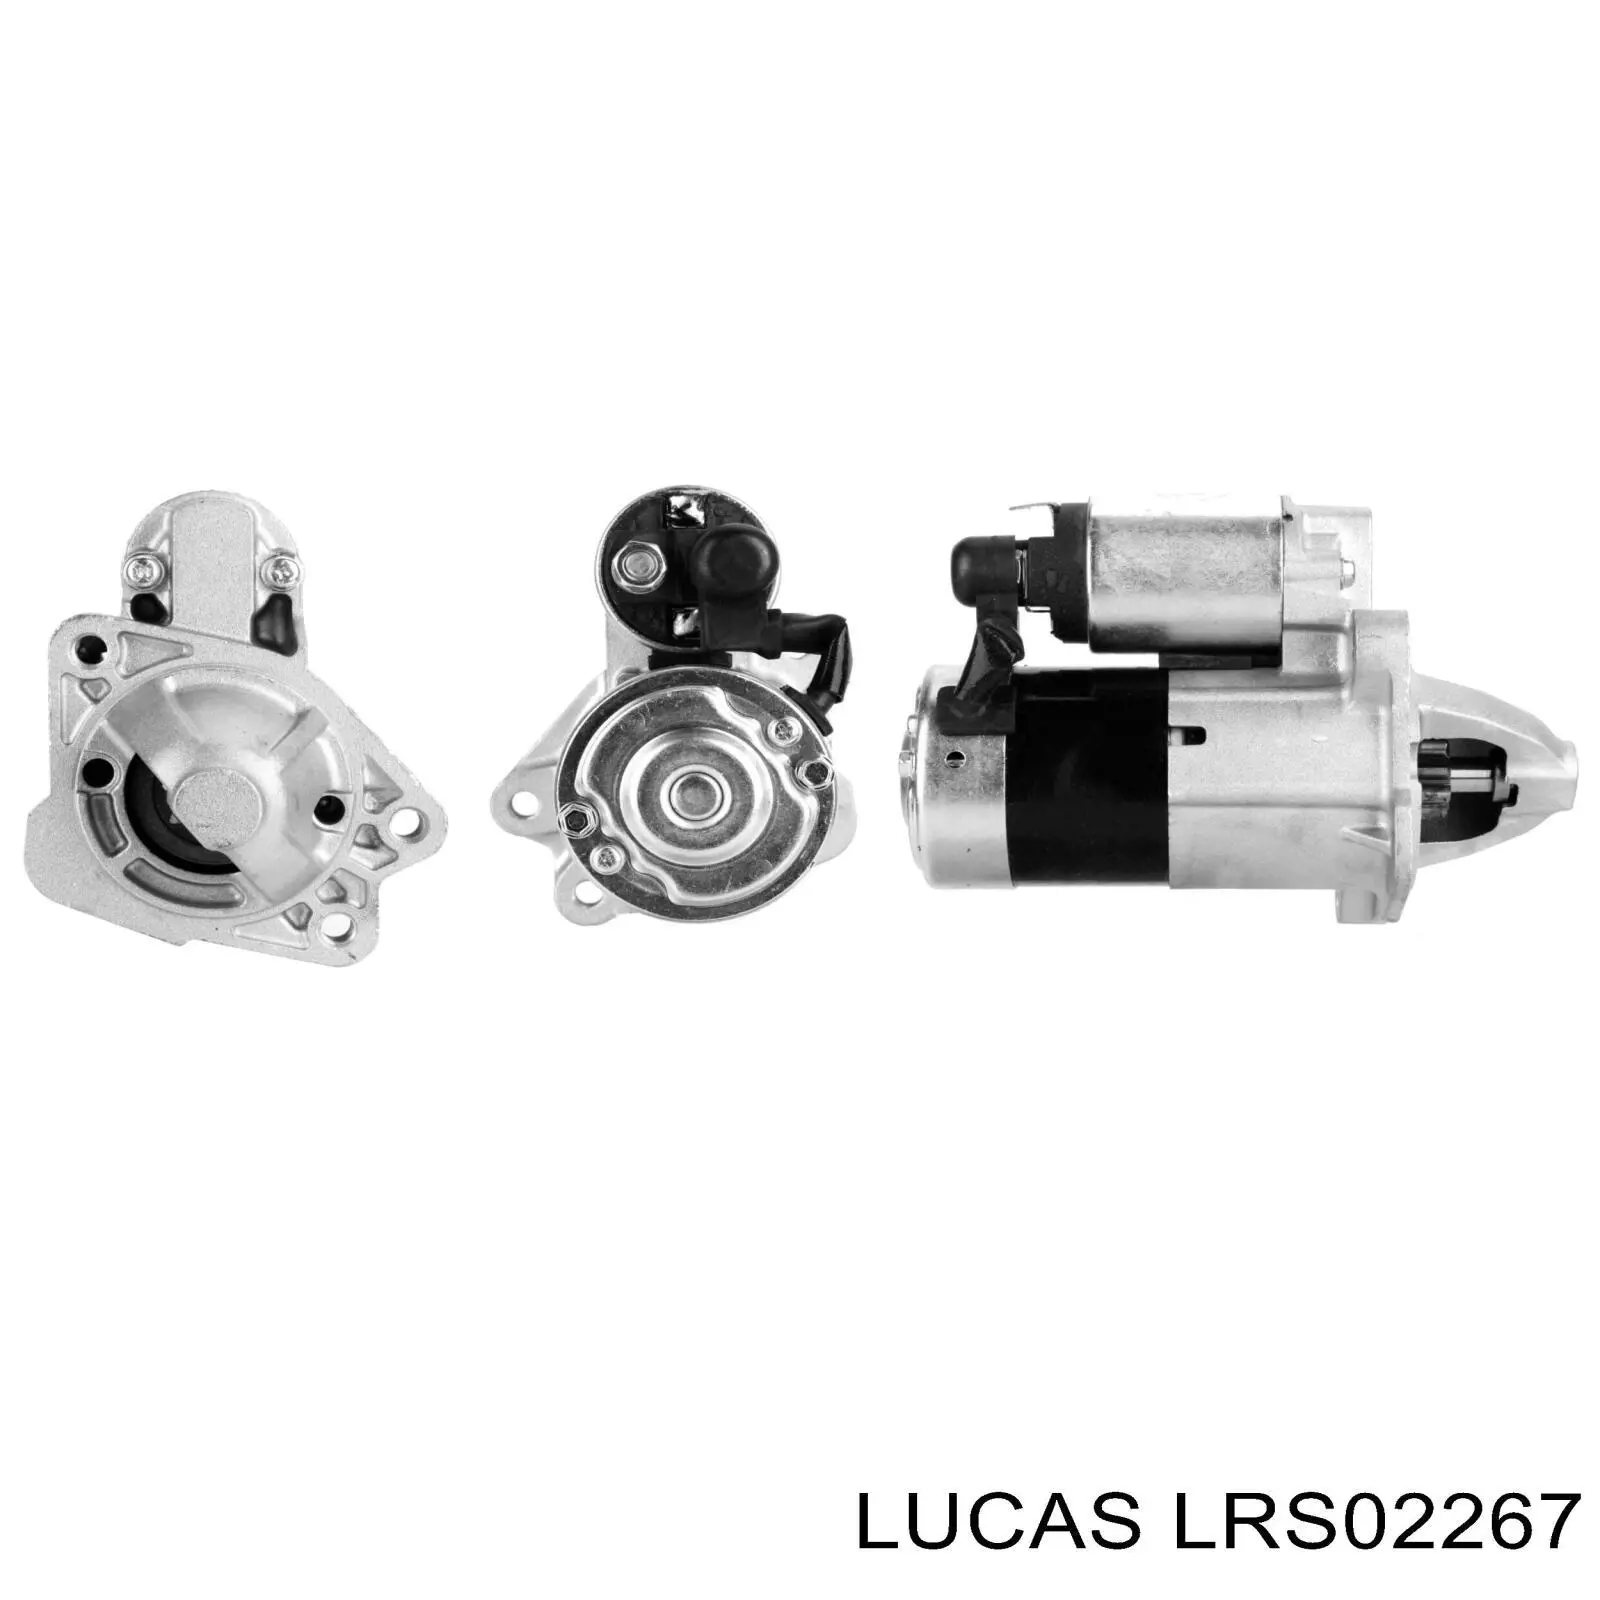 Motor de arranque LRS02267 Lucas